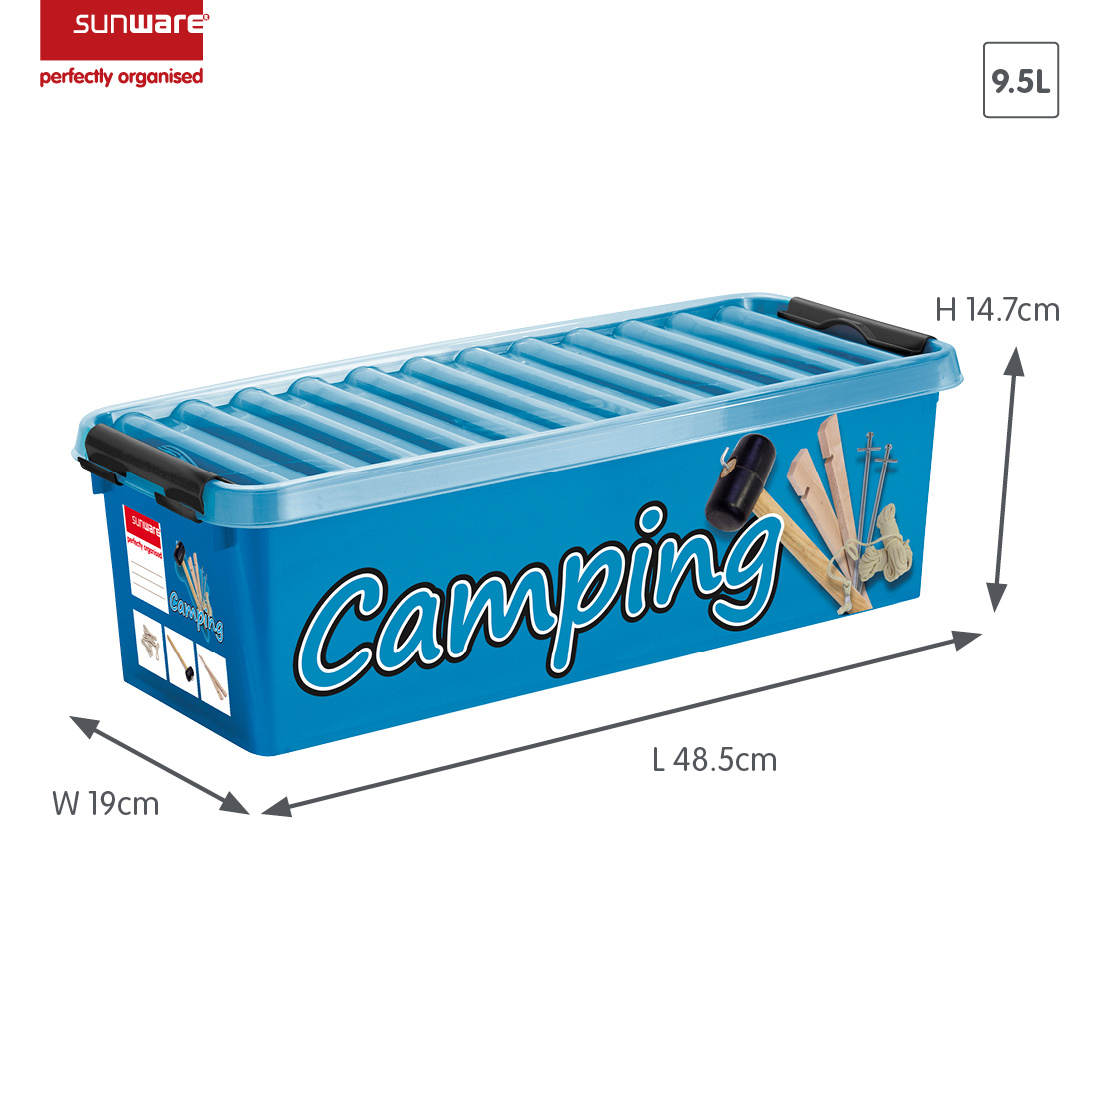 Q-line camping storage box 9.5L blue black